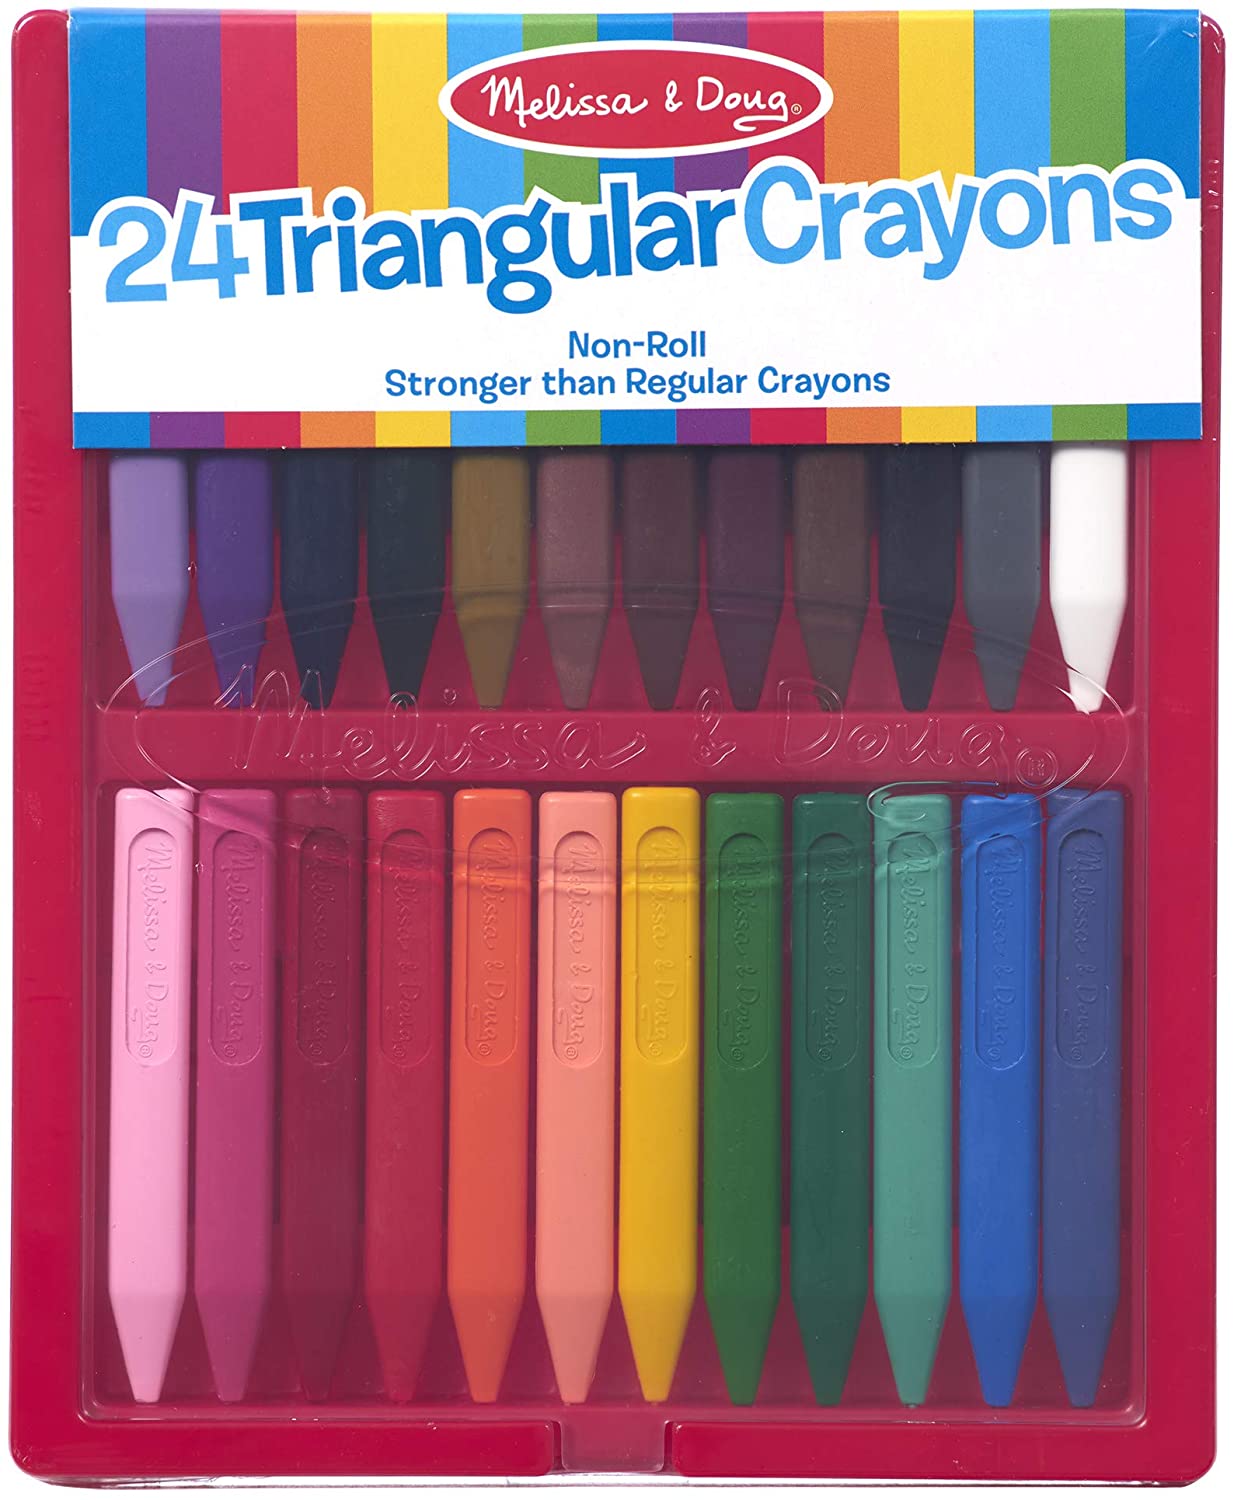 Triangular Crayon Set